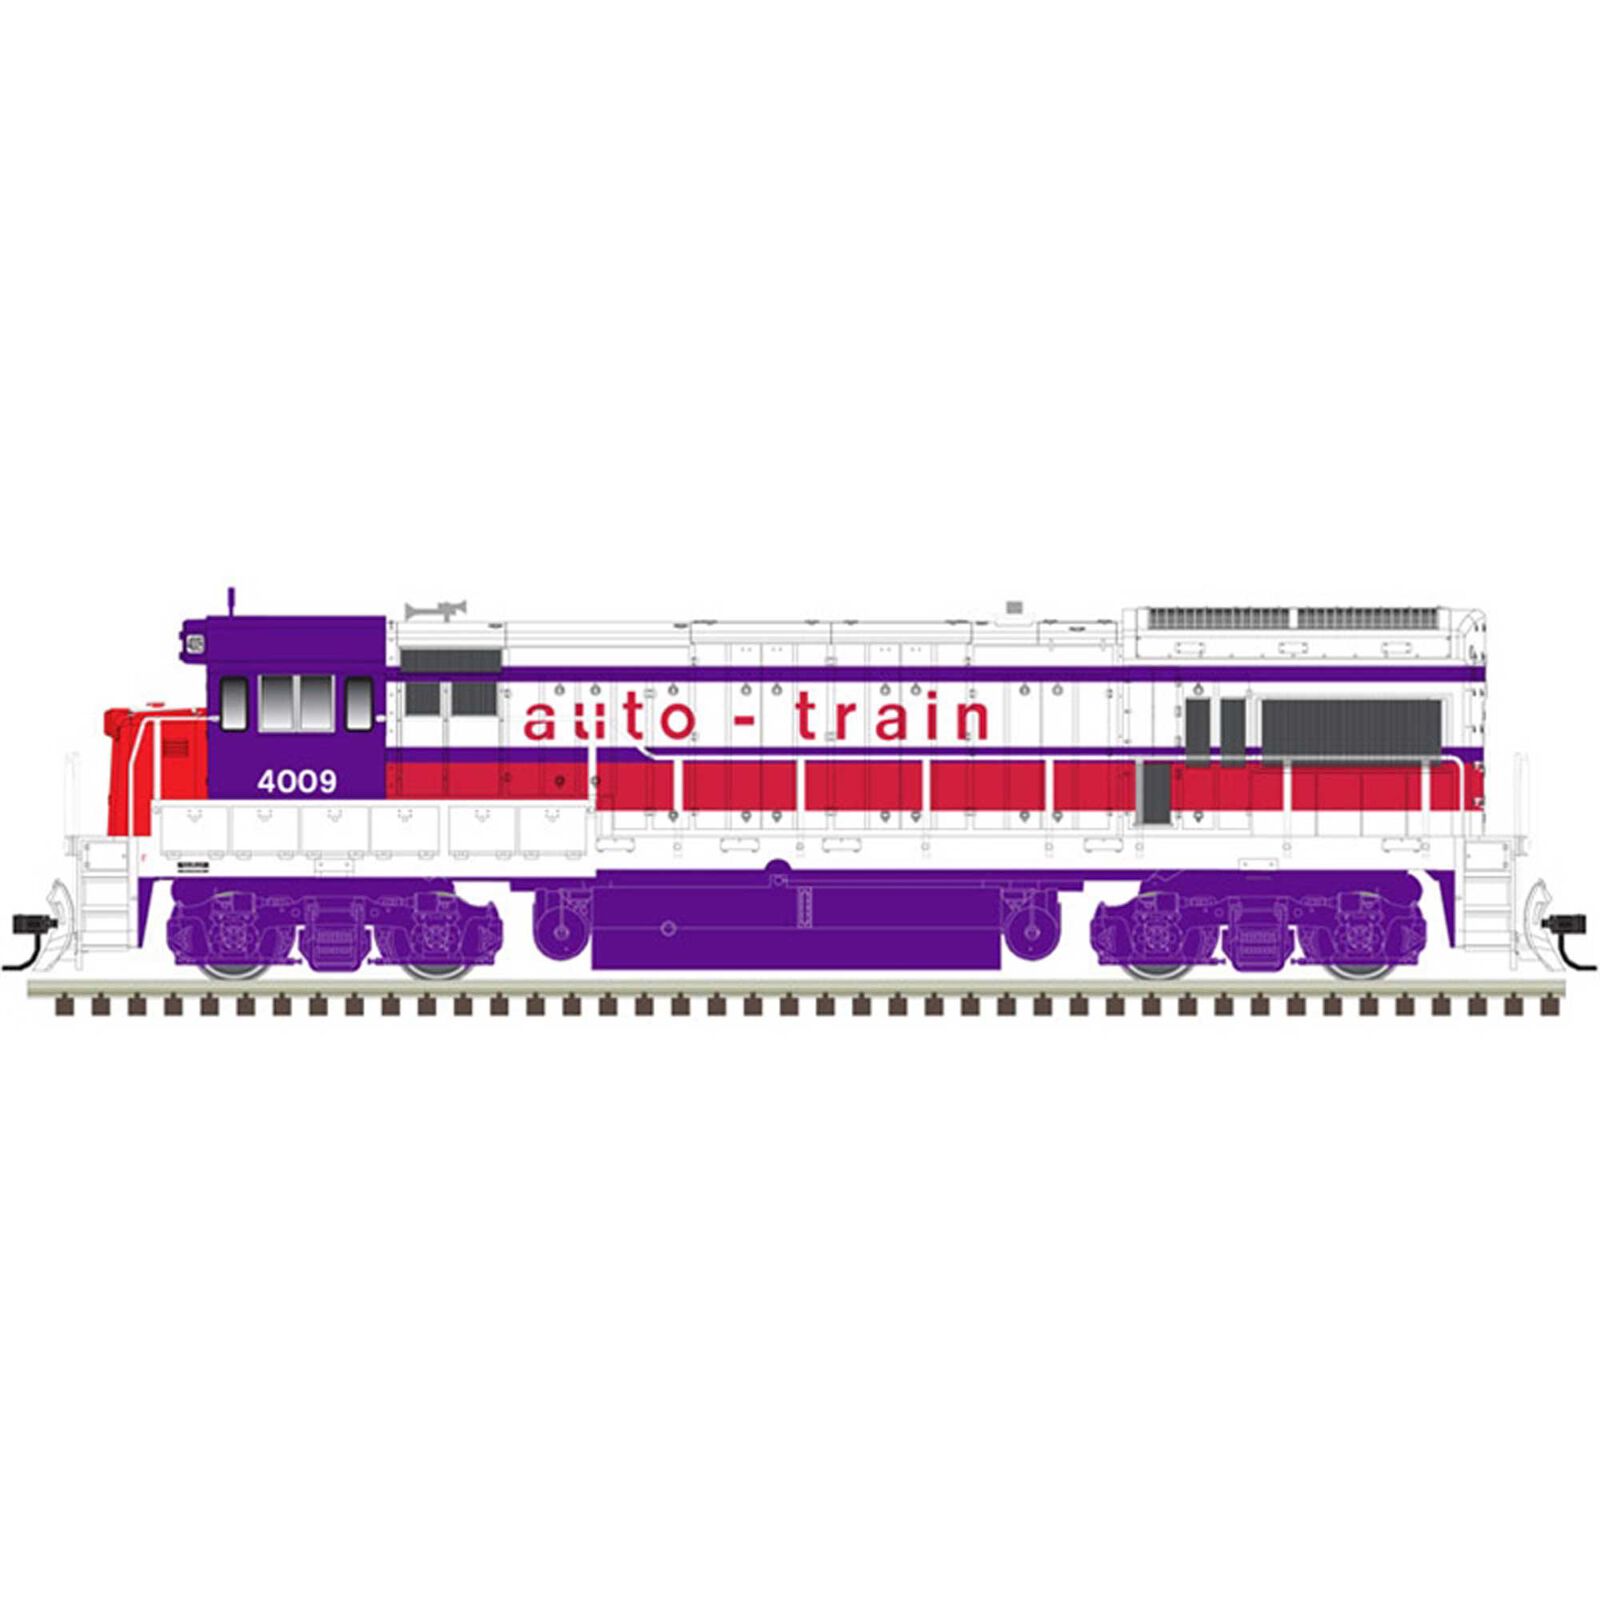 HO U33 36B Loco Auto Train 4005, White/Red/Purple